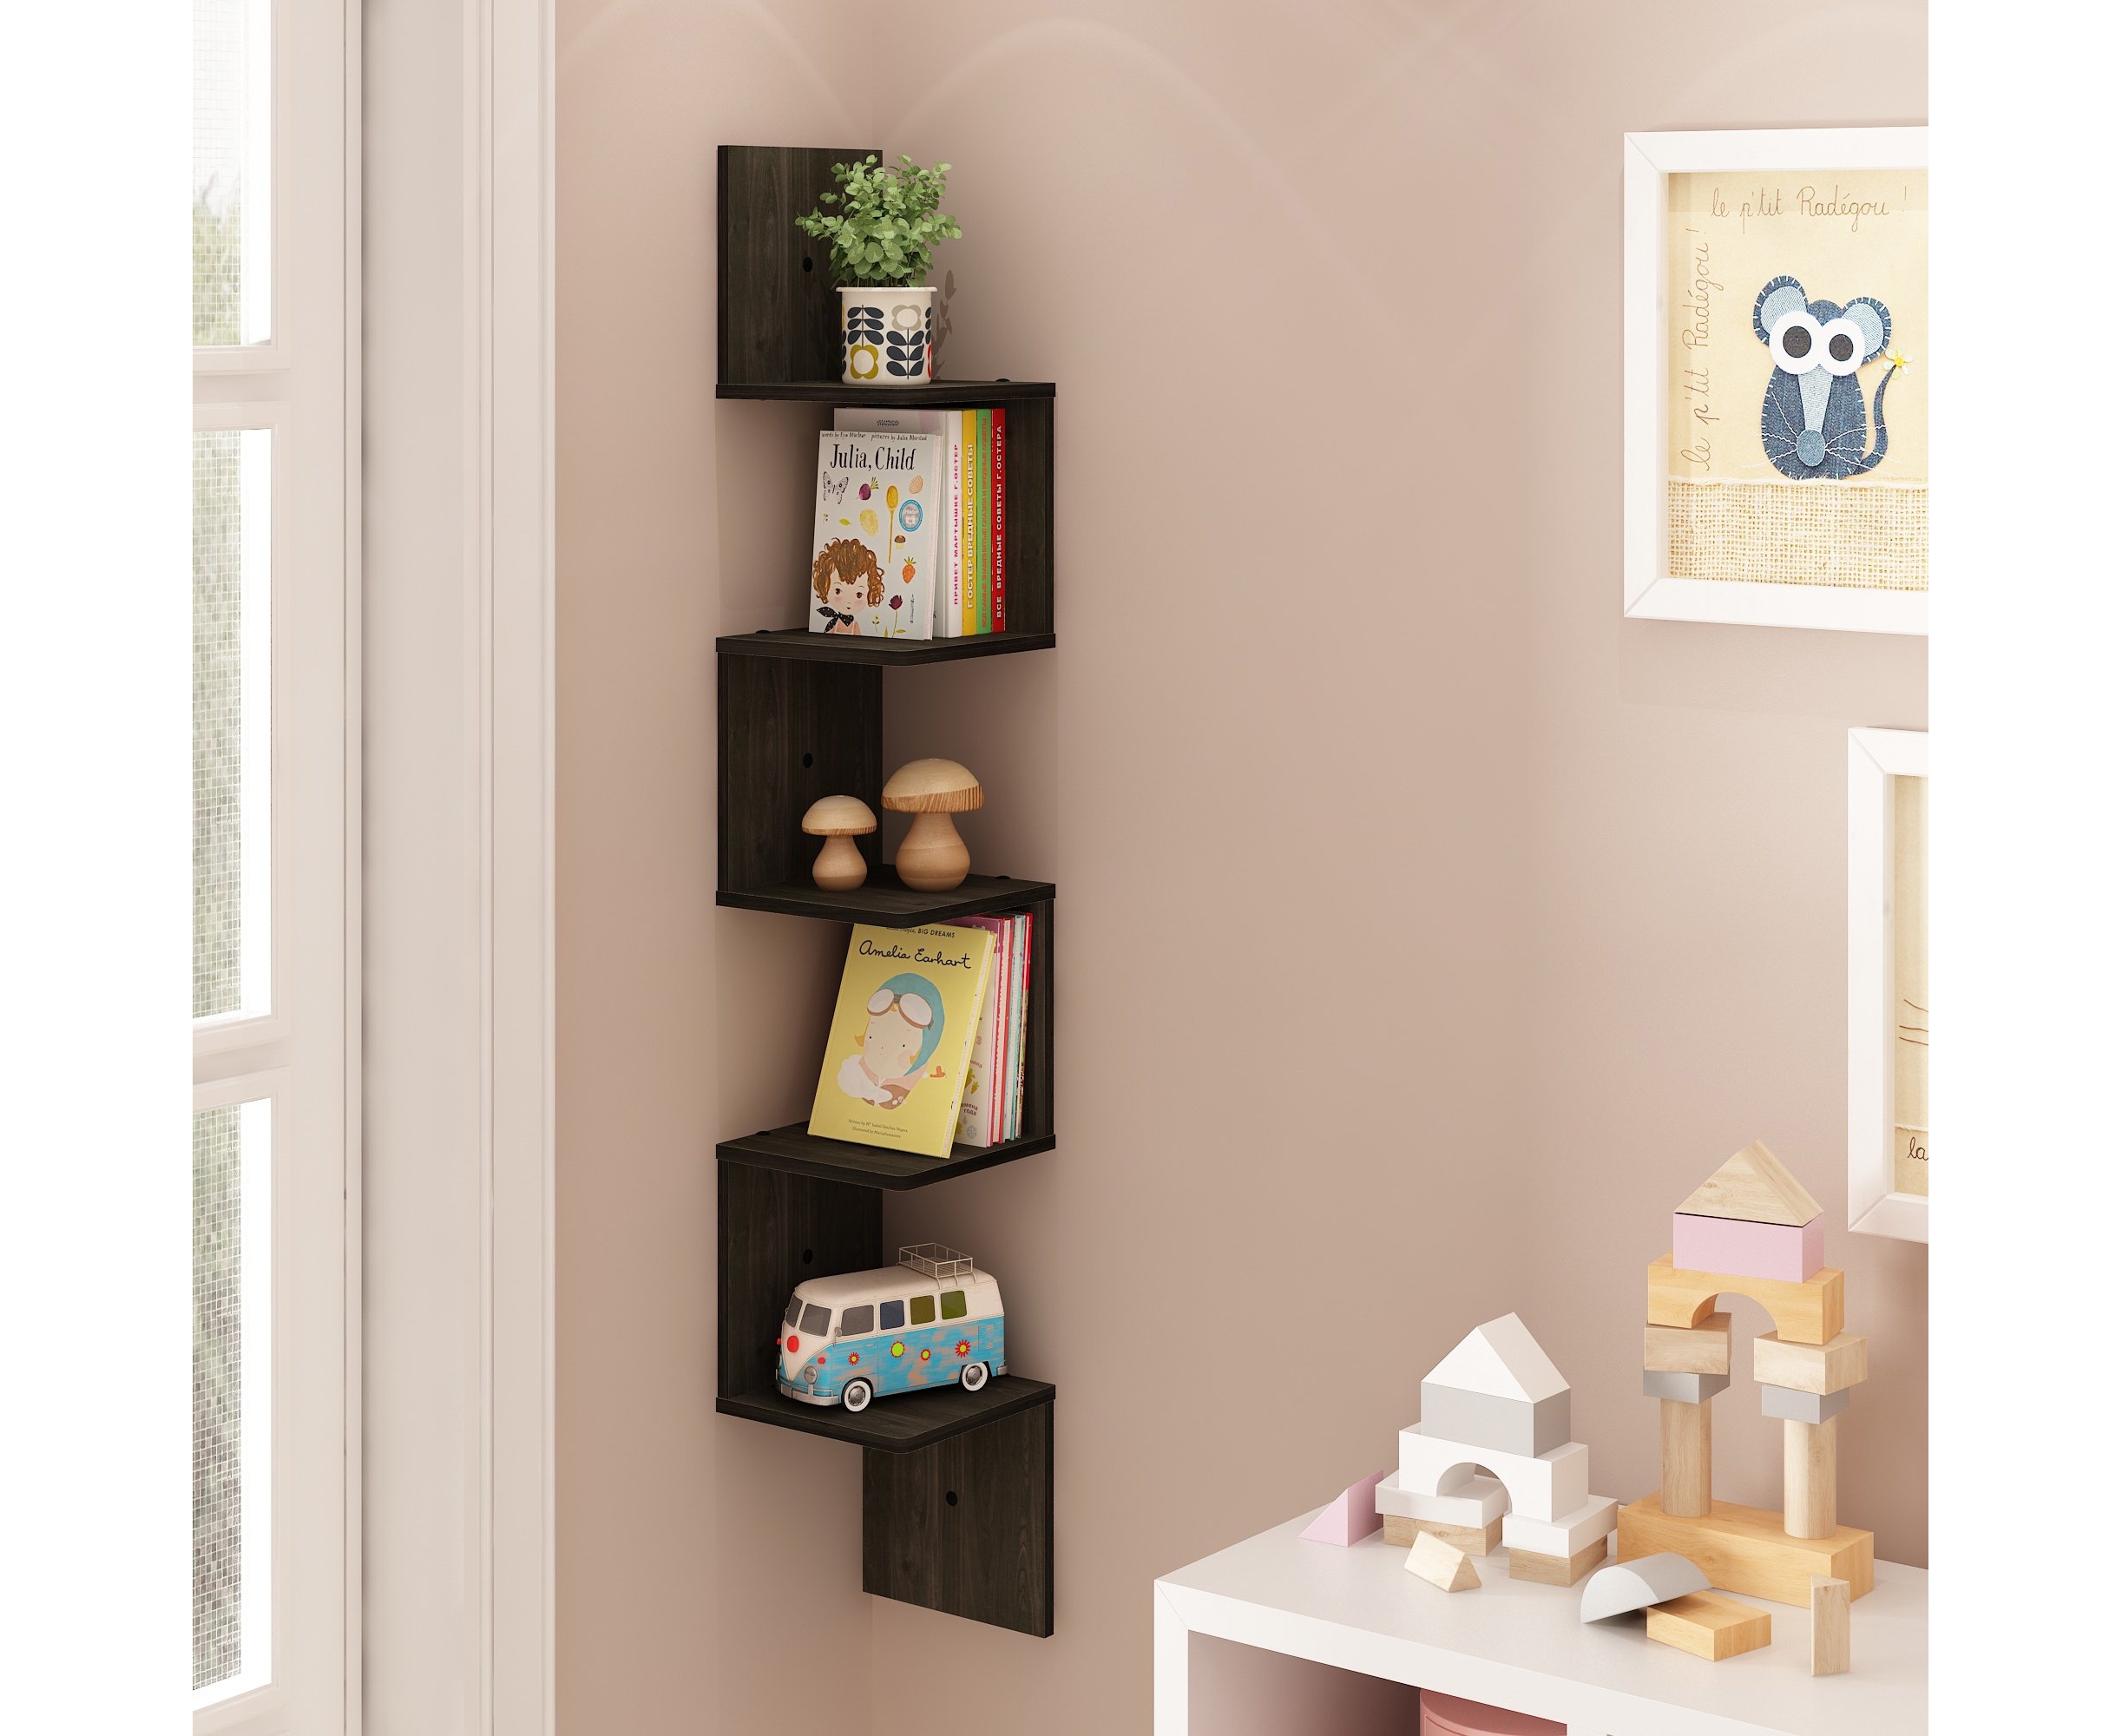 8 Inspiring Floating Shelves Ideas For Your Home